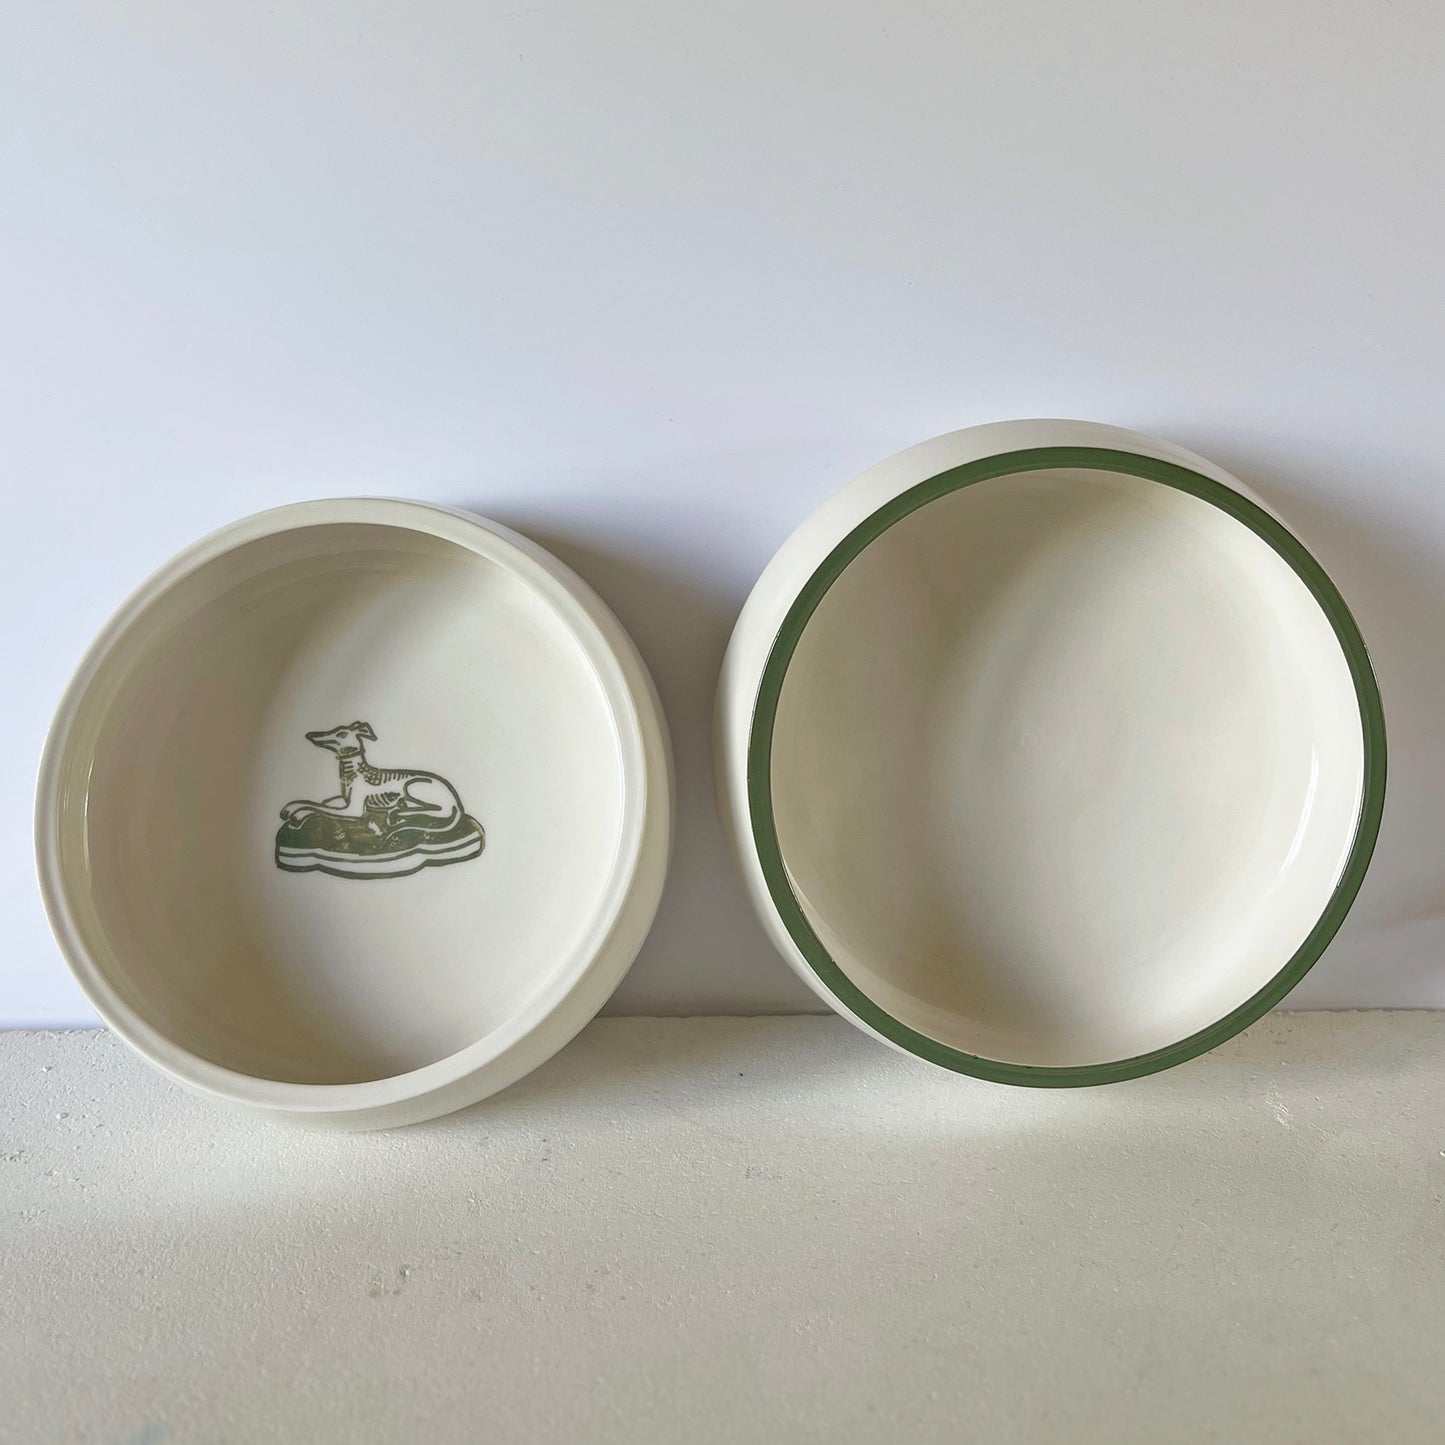 Porcelain Dog Bowls Hound and Green Rim